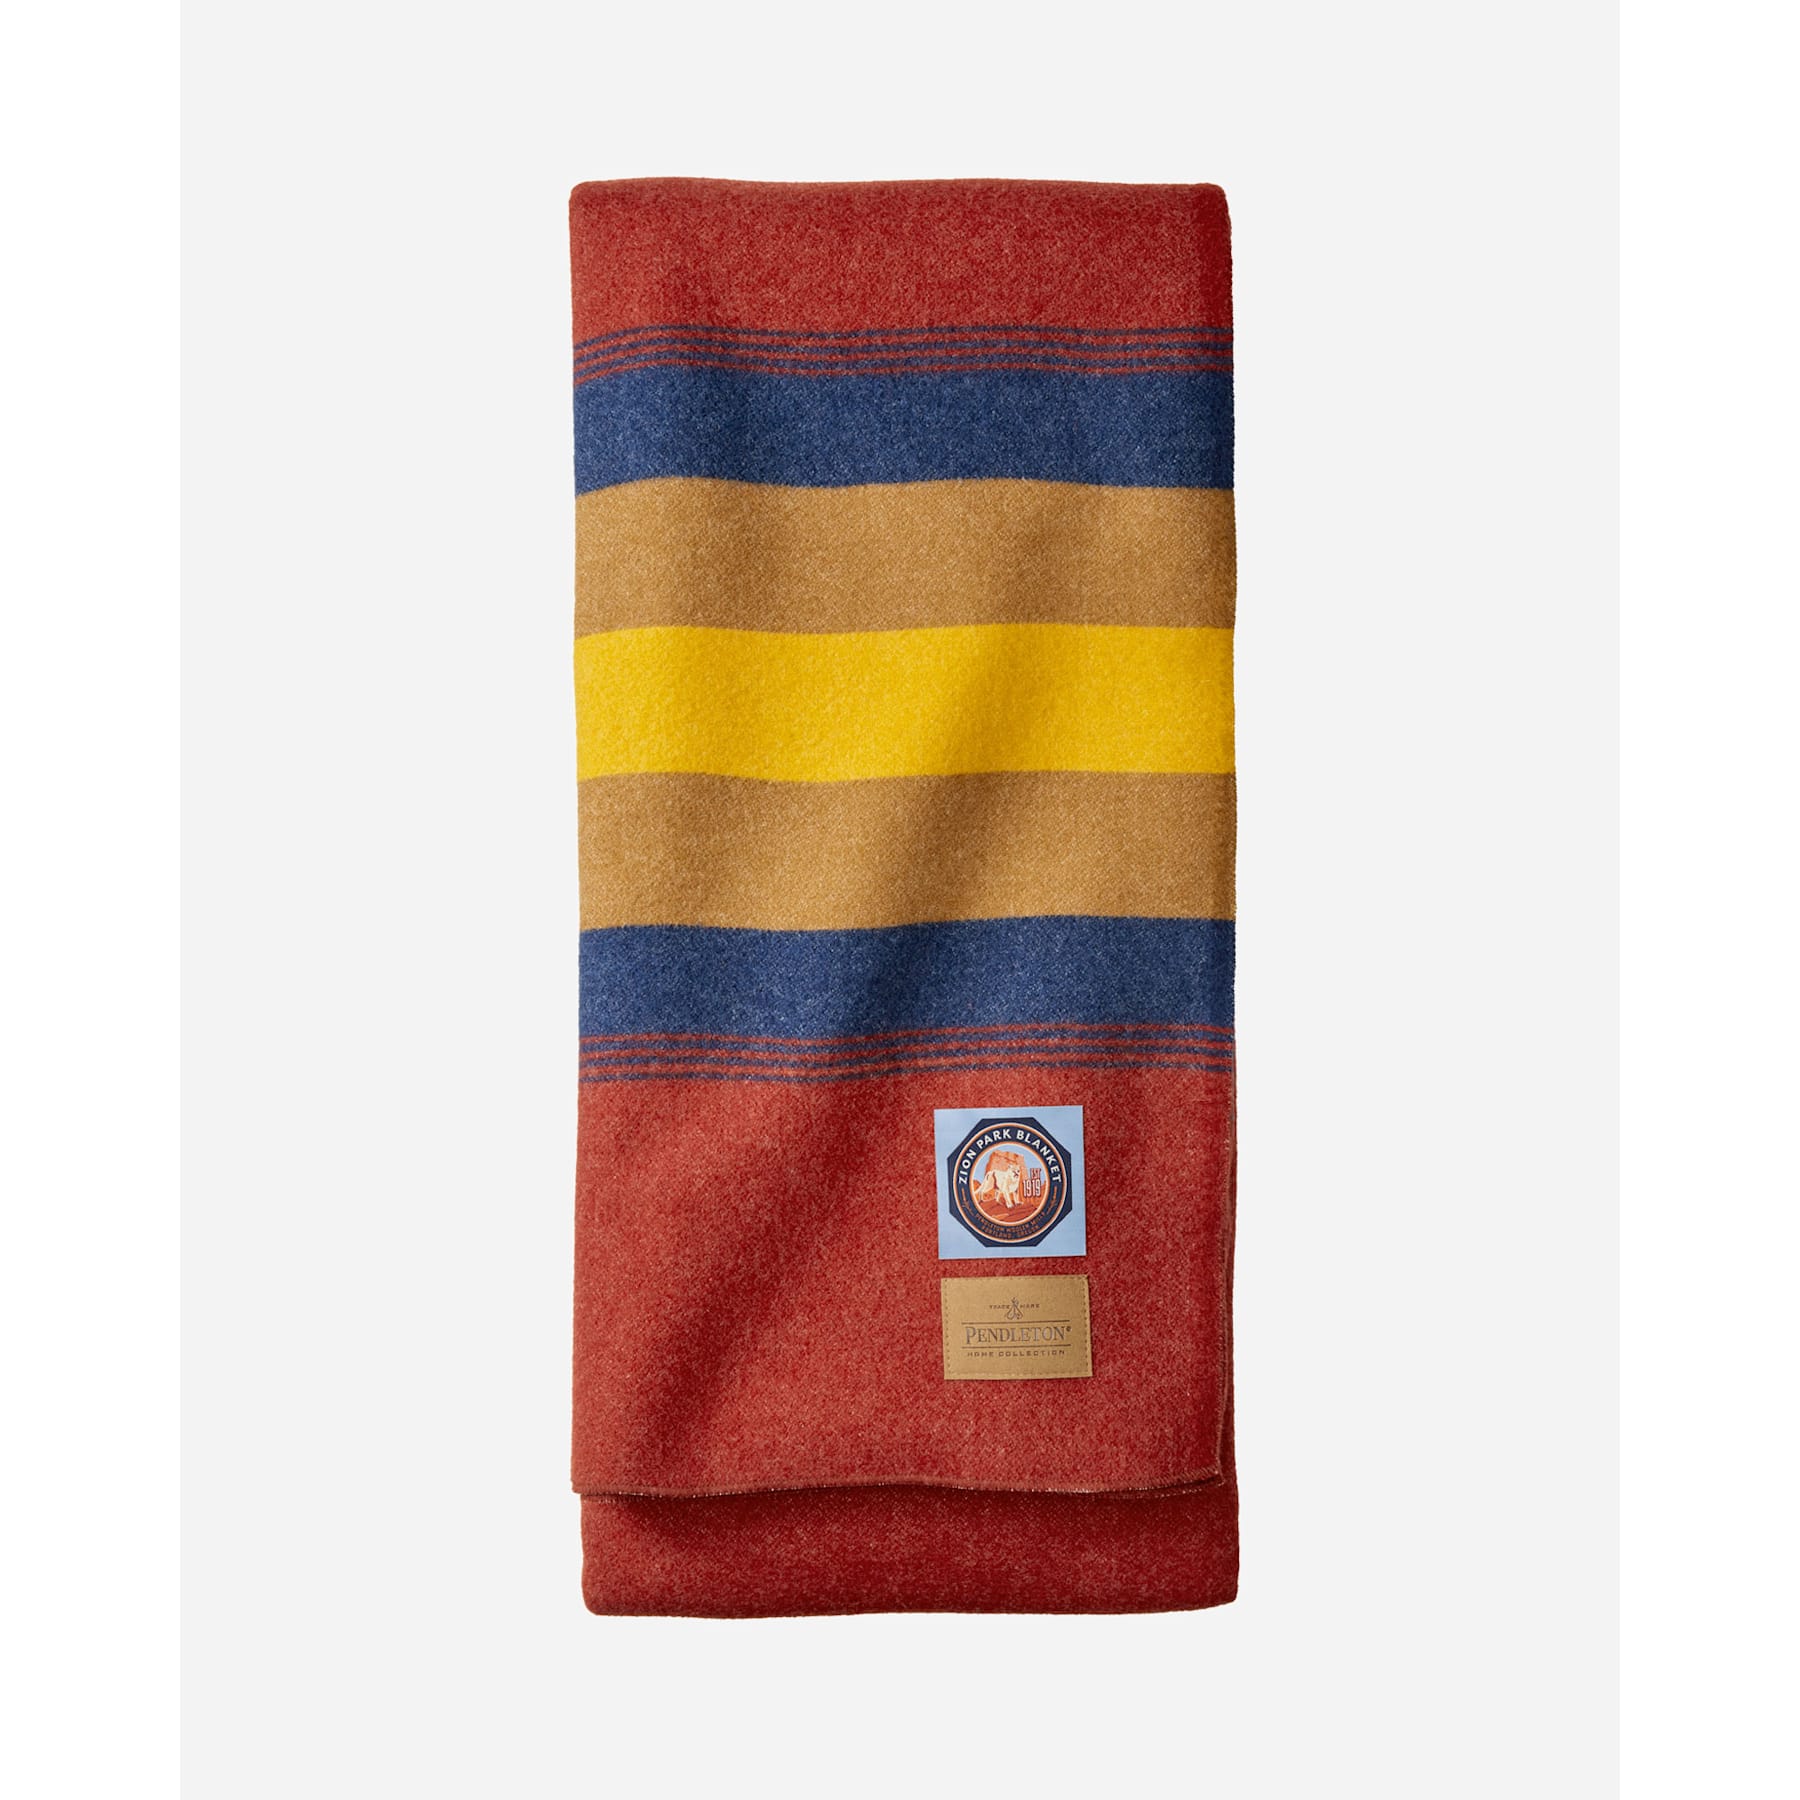 Pendleton Blankets, burgundy/blue/yellow/brown stripes,  folded view